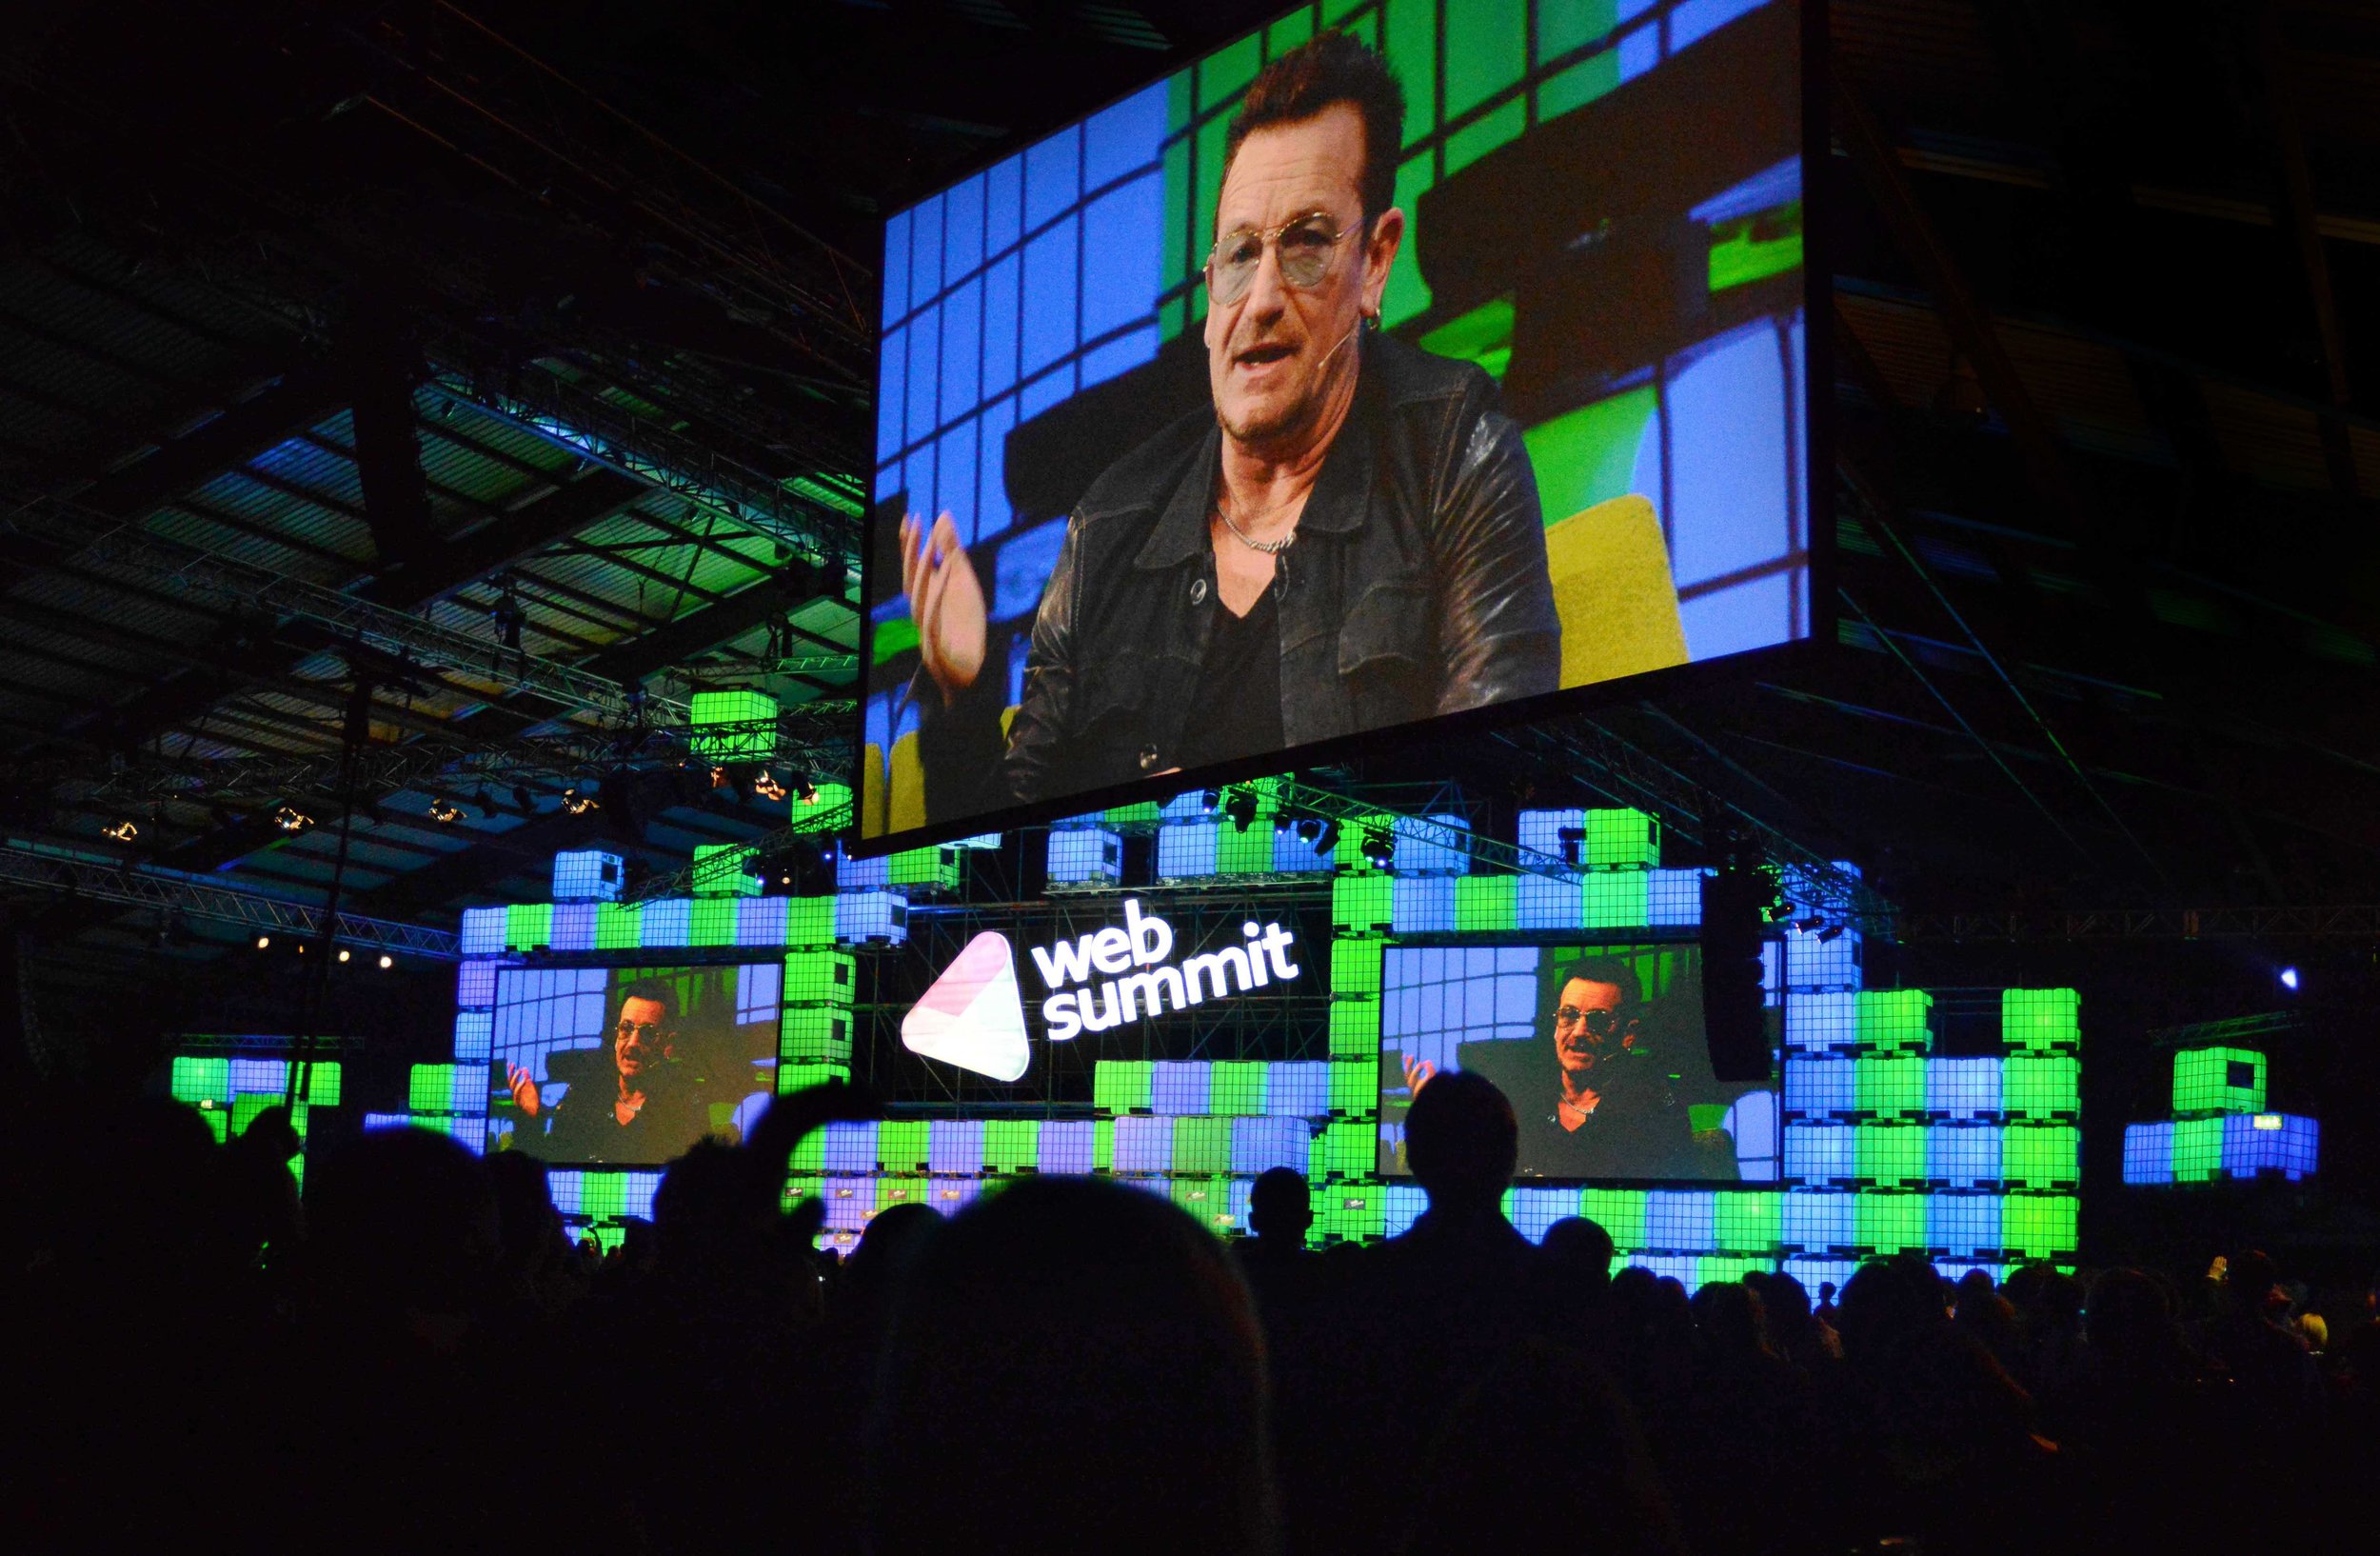  Bono speaks at Web Summit 2014 Dublin, Ireland /  Web Summit / Sportsfile  